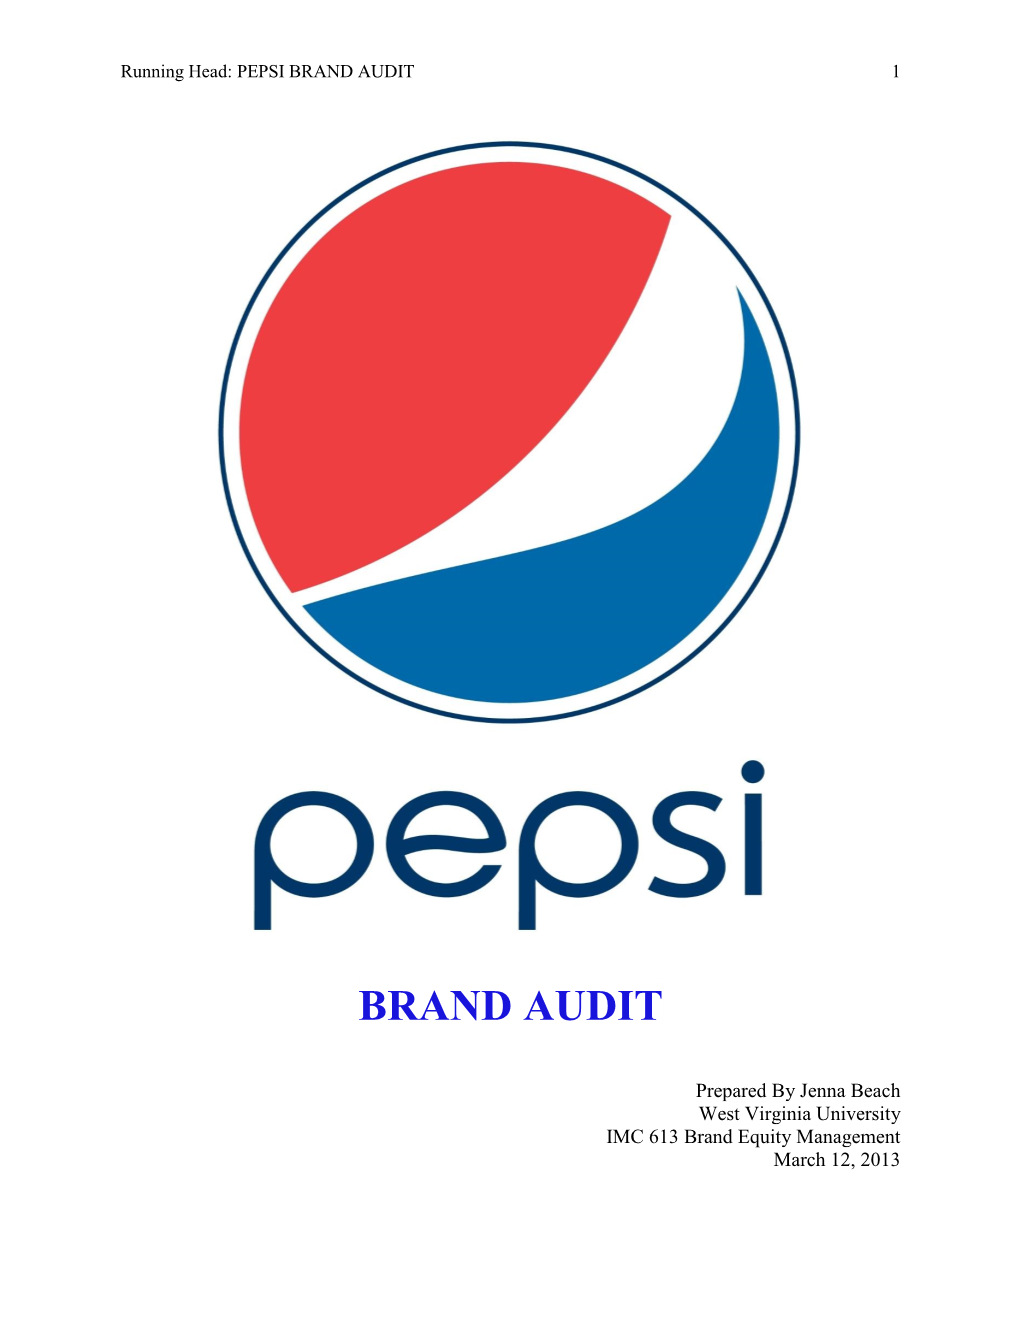 Complete Pepsi Brand Audit